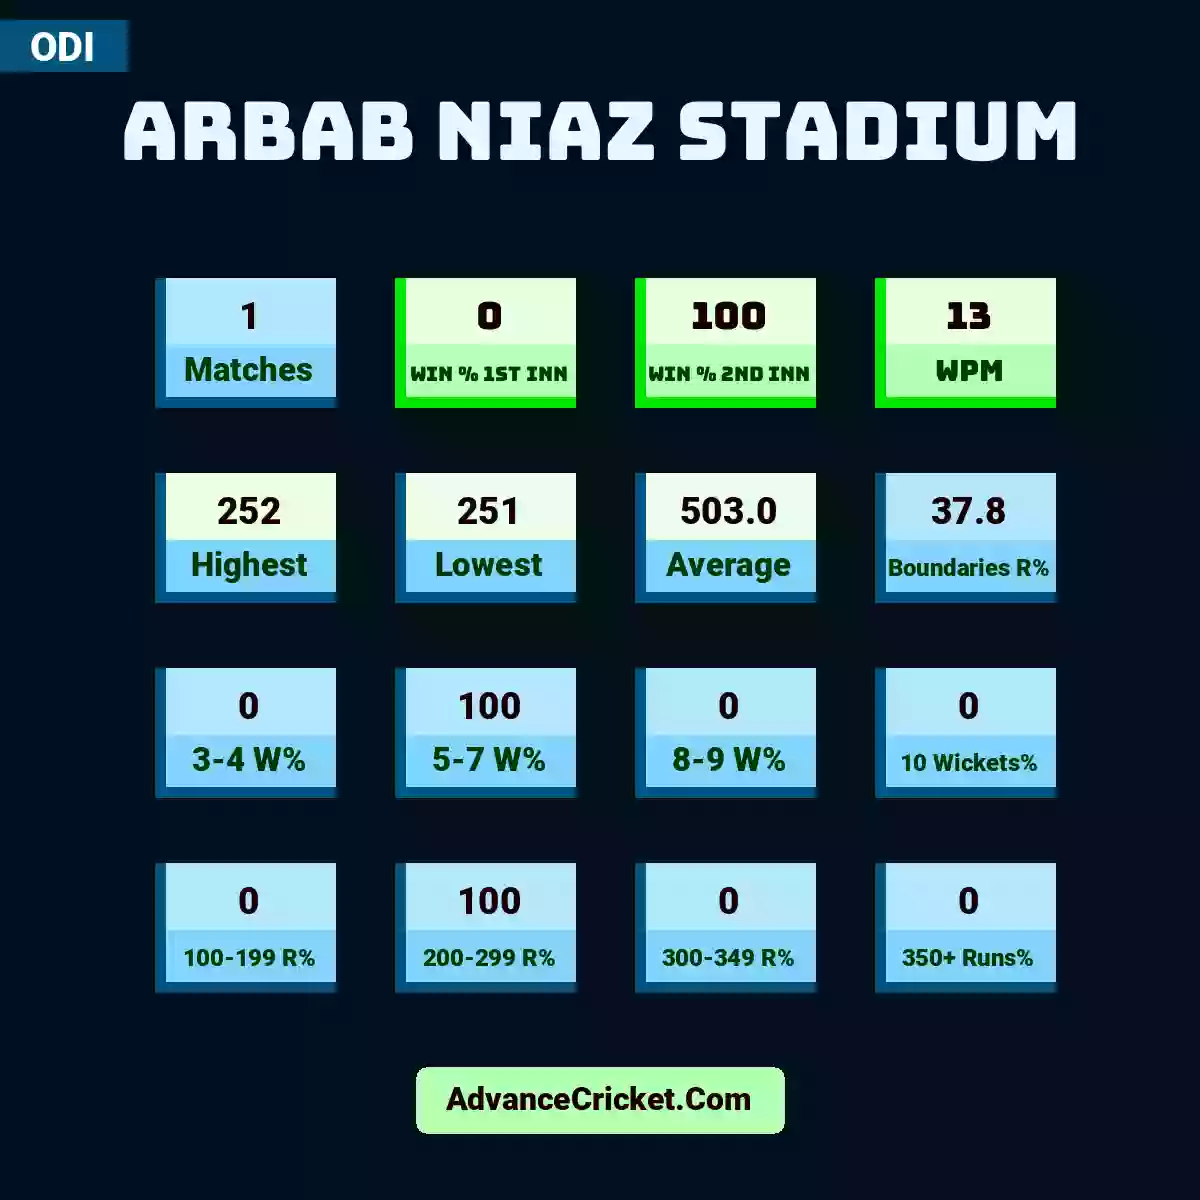 Image showing Arbab Niaz Stadium with Matches: 1, Win % 1st Inn: 0, Win % 2nd Inn: 100, WPM: 13, Highest: 252, Lowest: 251, Average: 503.0, Boundaries R%: 37.8, 3-4 W%: 0, 5-7 W%: 100, 8-9 W%: 0, 10 Wickets%: 0, 100-199 R%: 0, 200-299 R%: 100, 300-349 R%: 0, 350+ Runs%: 0.